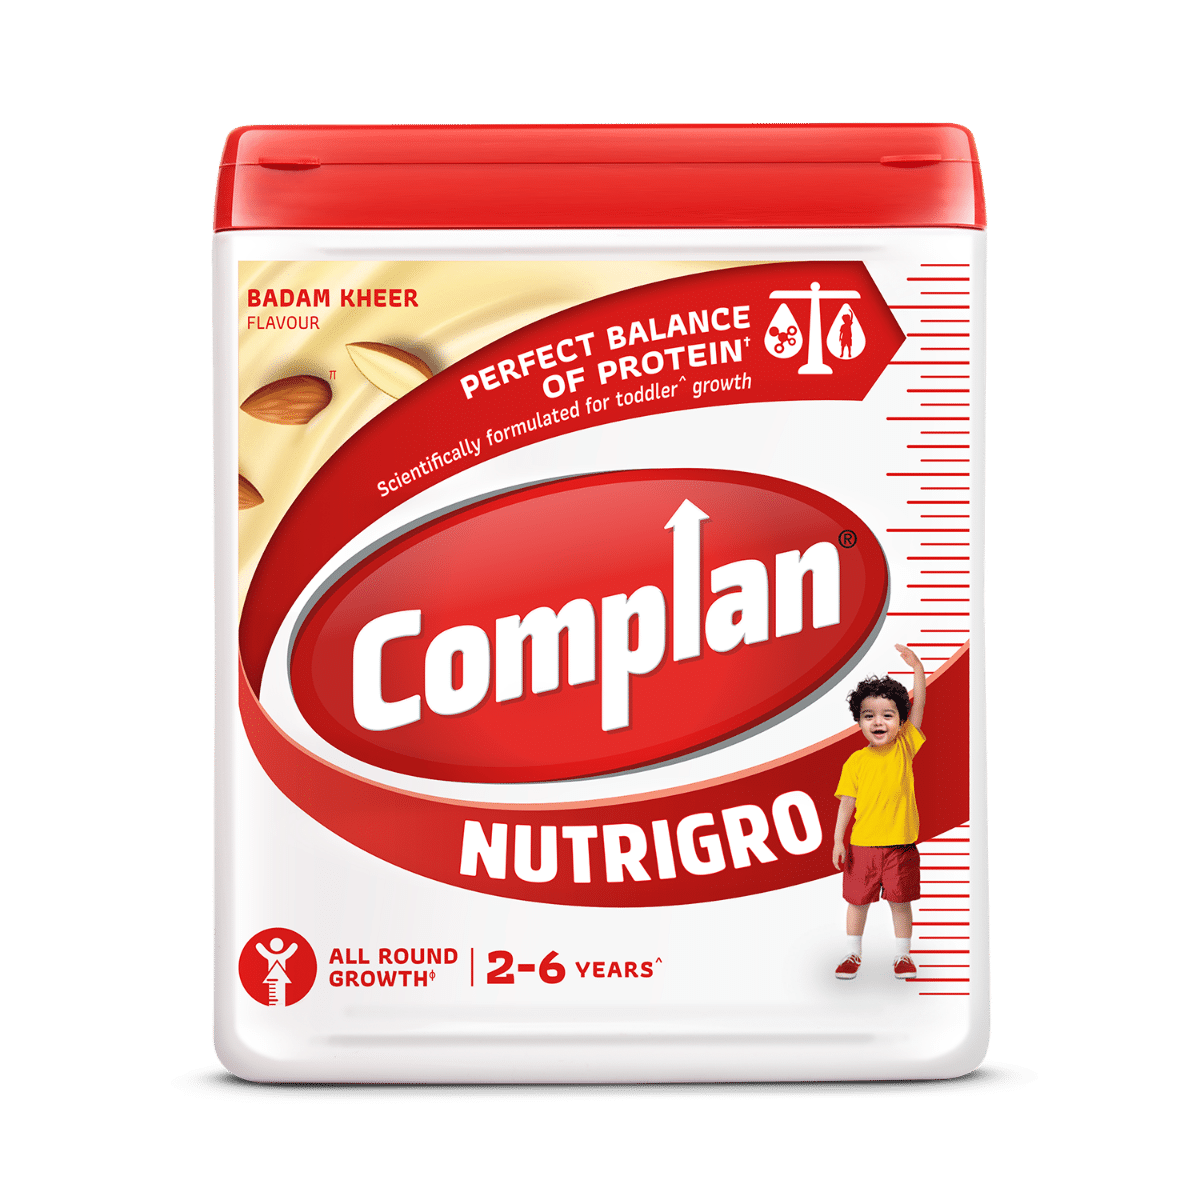 Buy Complan Nutrigro Badam Kheer Flavour Nutrition Drink Powder, 400 gm Jar Online